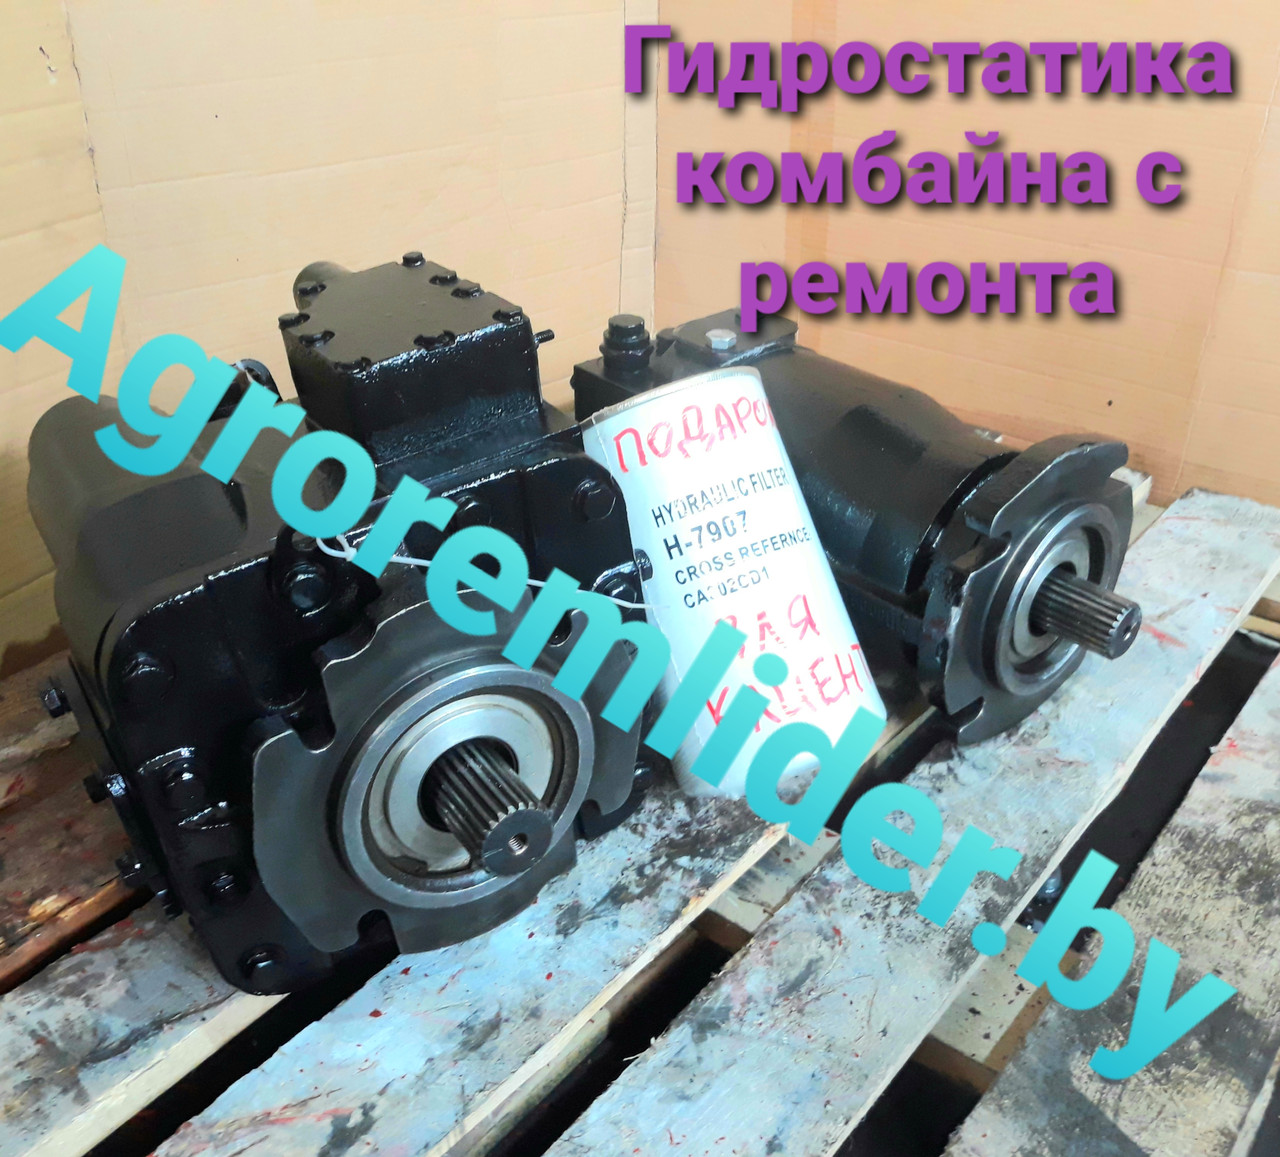 ГСТ-112 на КЗС из ремонта ( насос НП112-1 и мотор МП112-1)